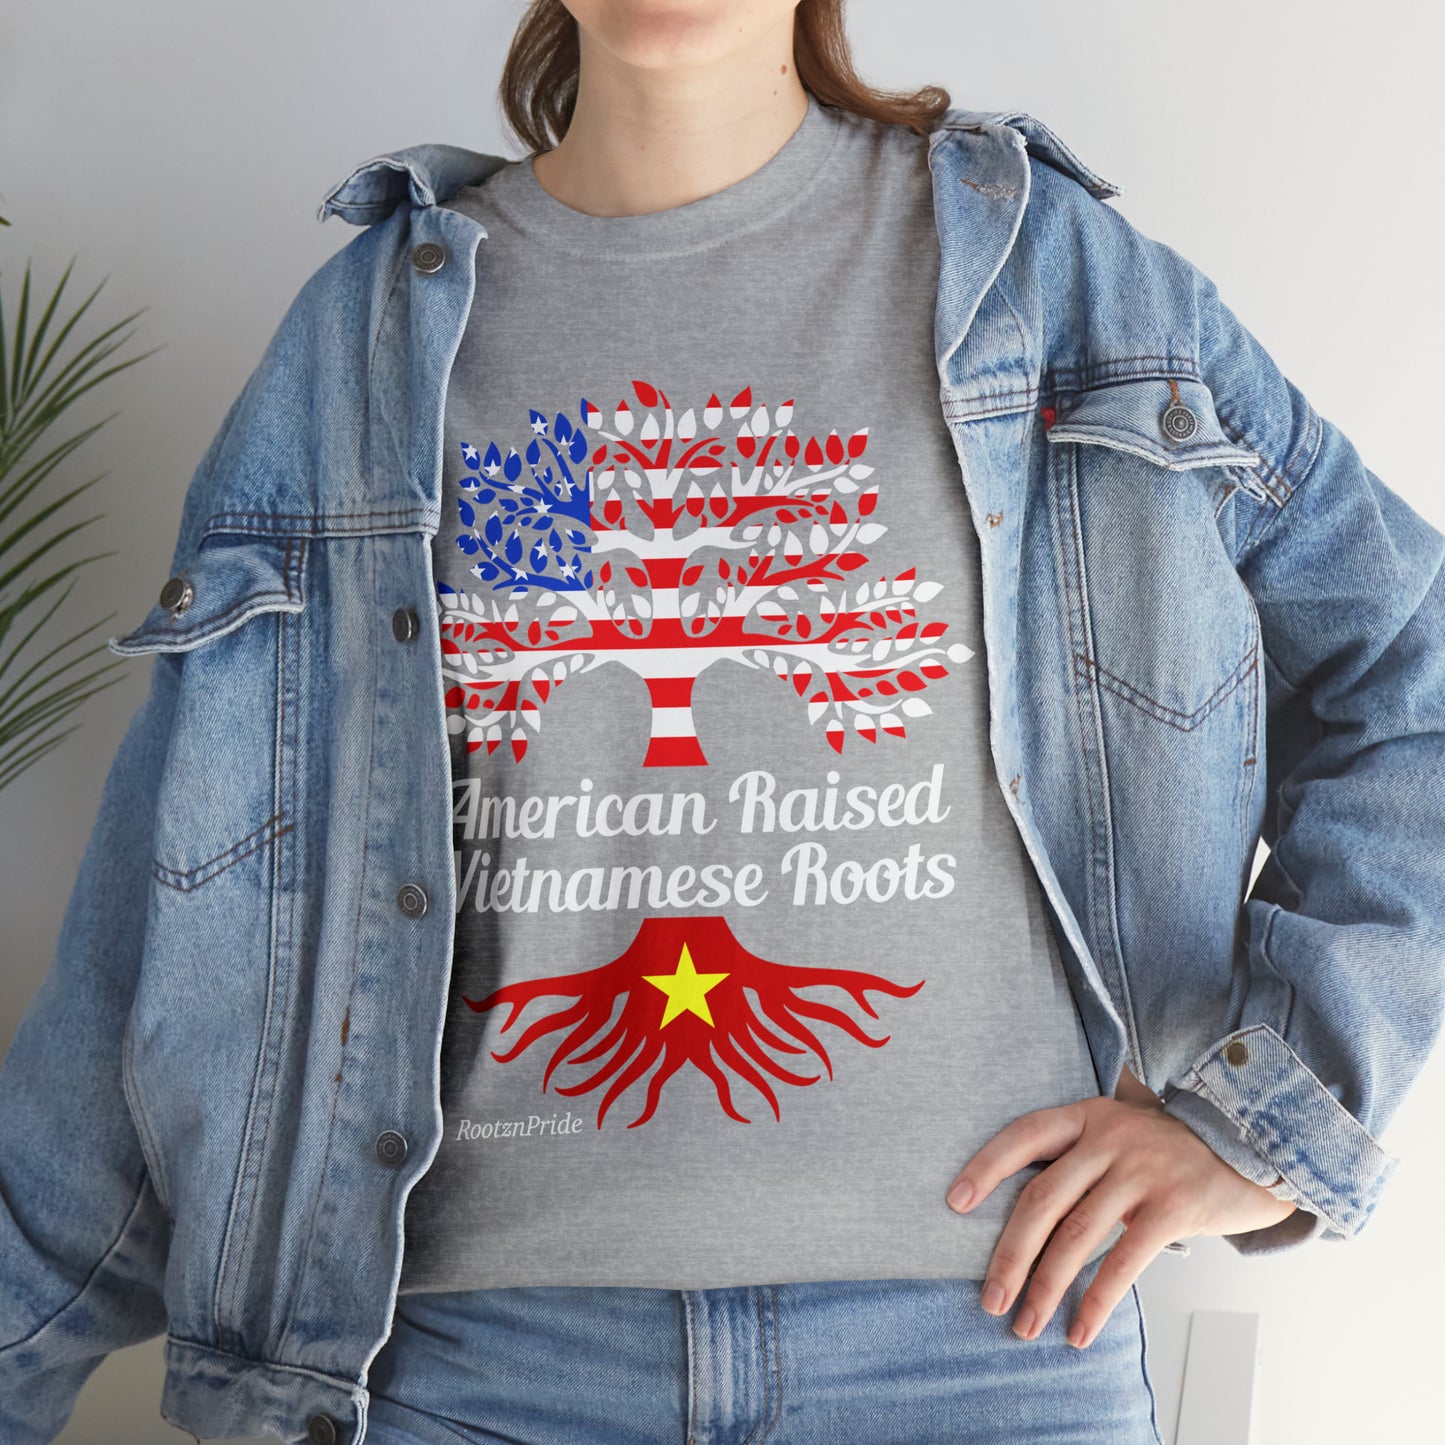 Vietnamese Roots Design 5: Adult T-Shirt